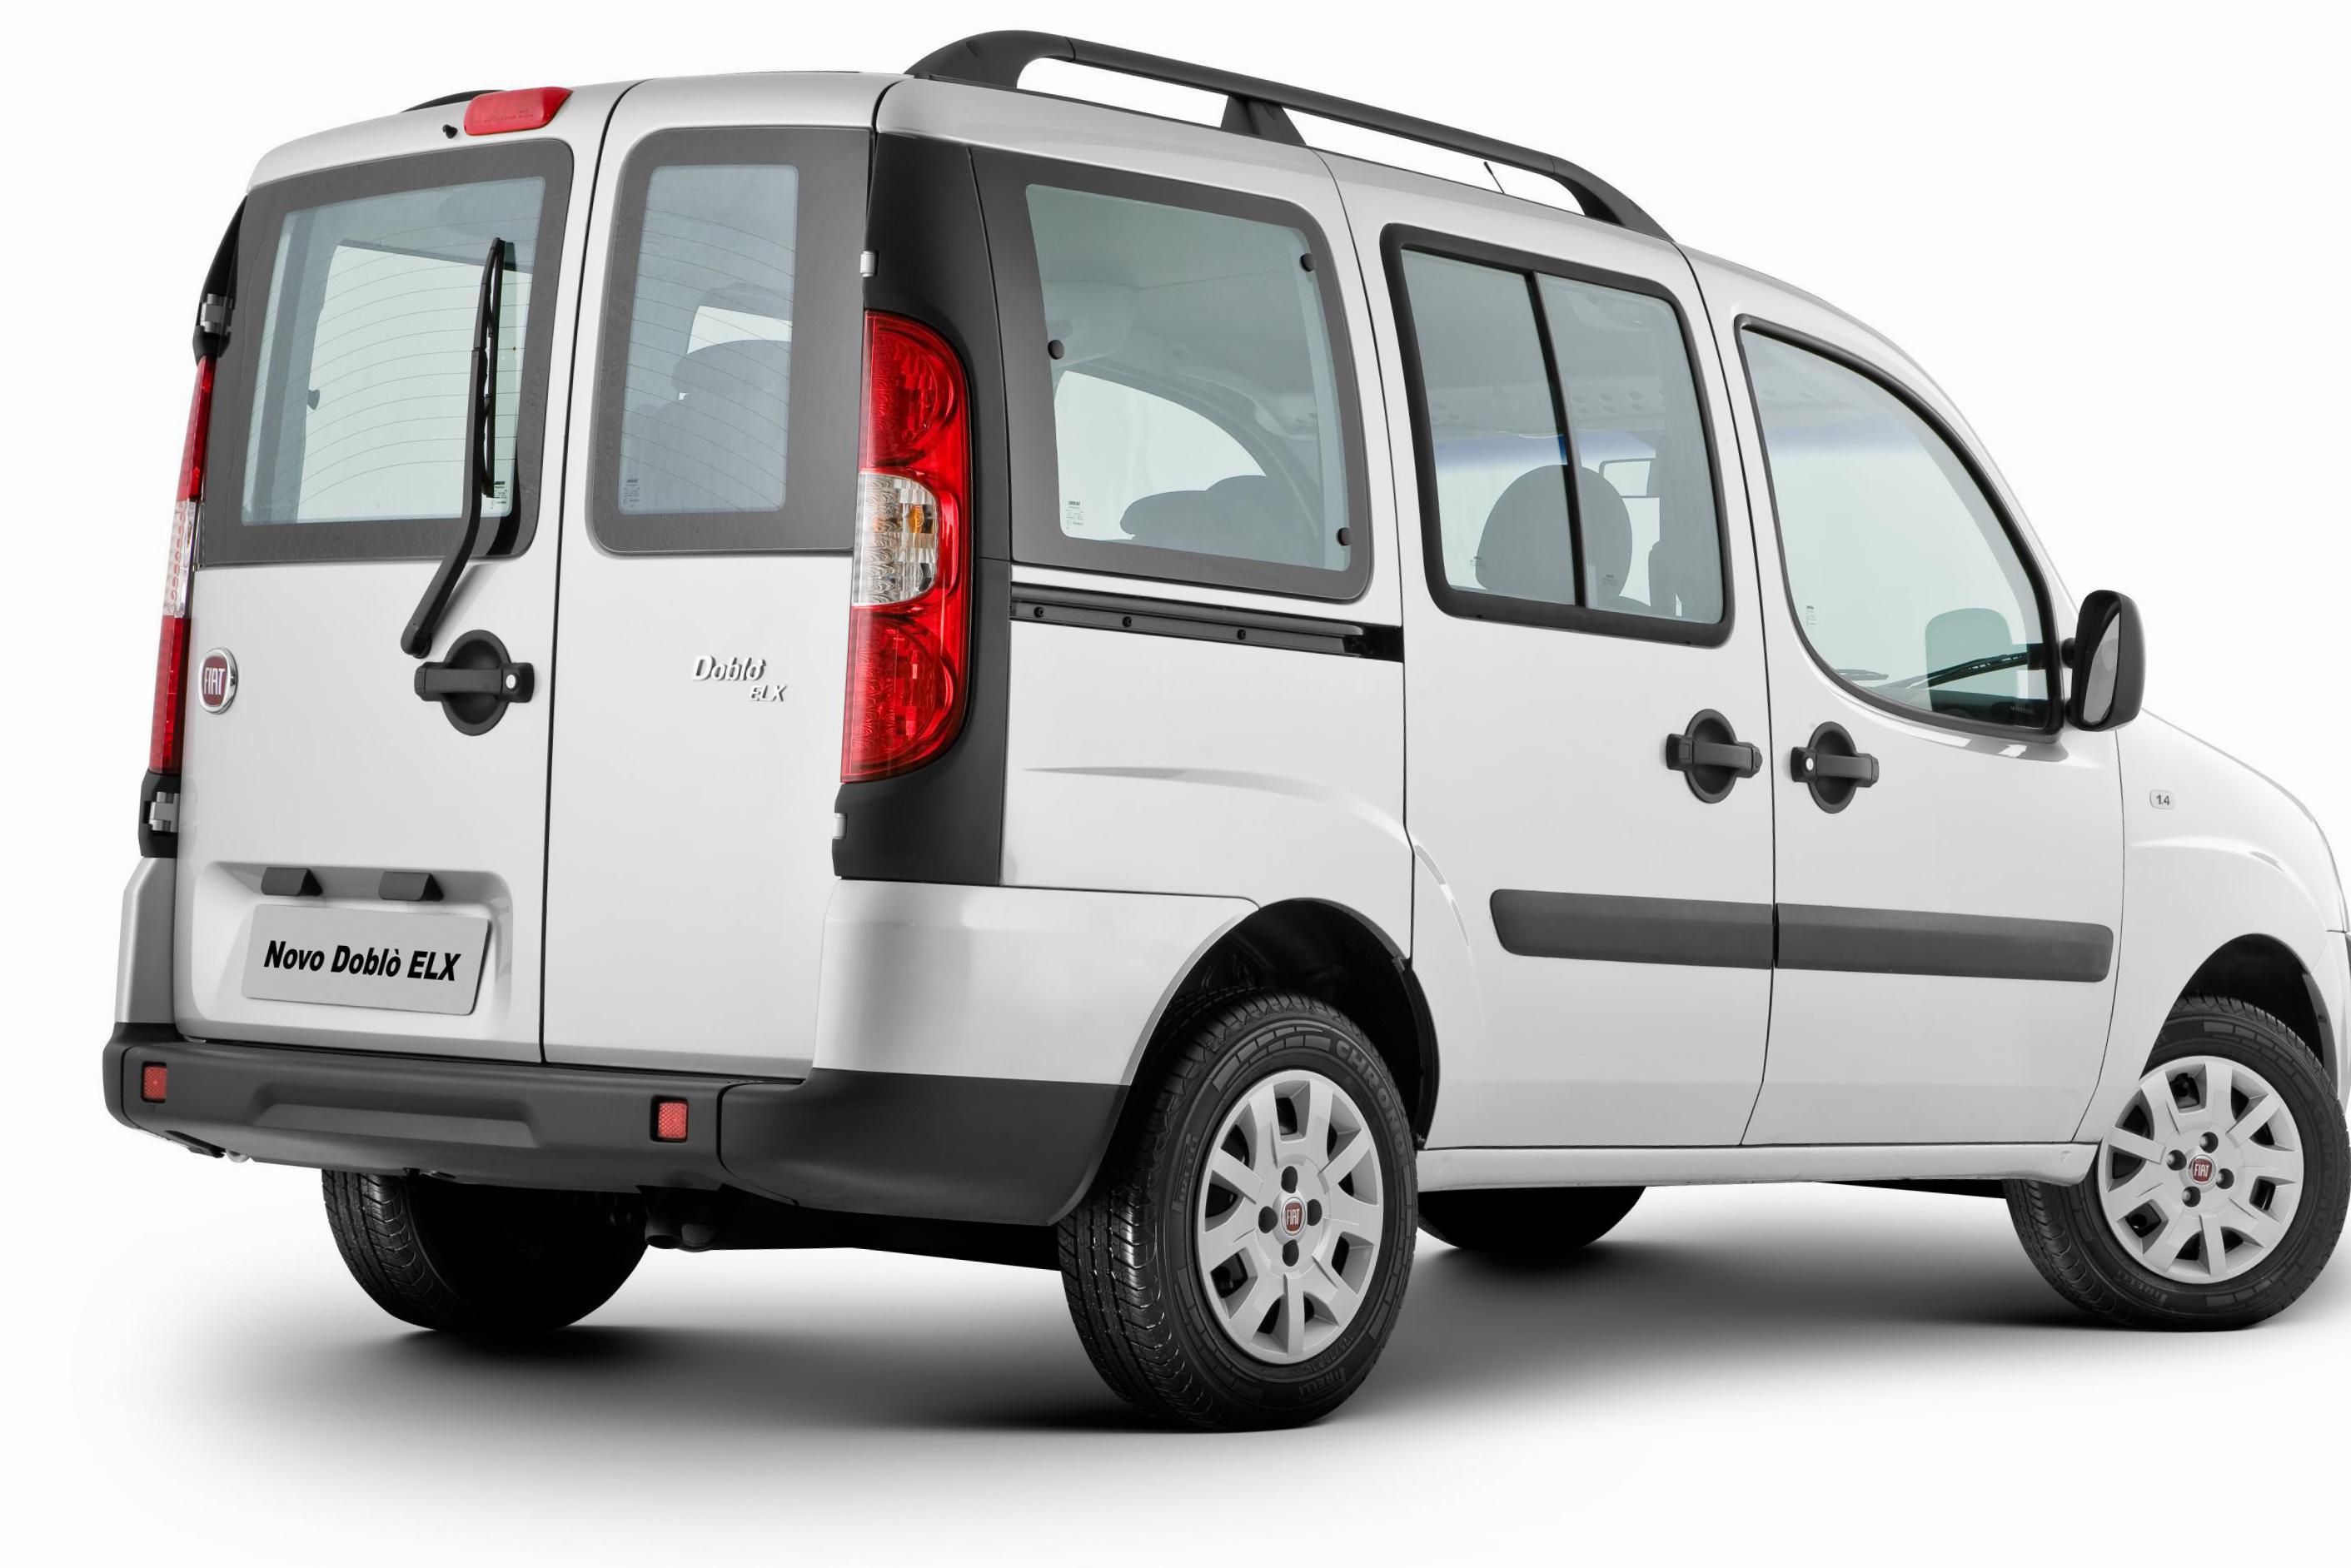 Fiat Doblo Cargo Specifications minivan